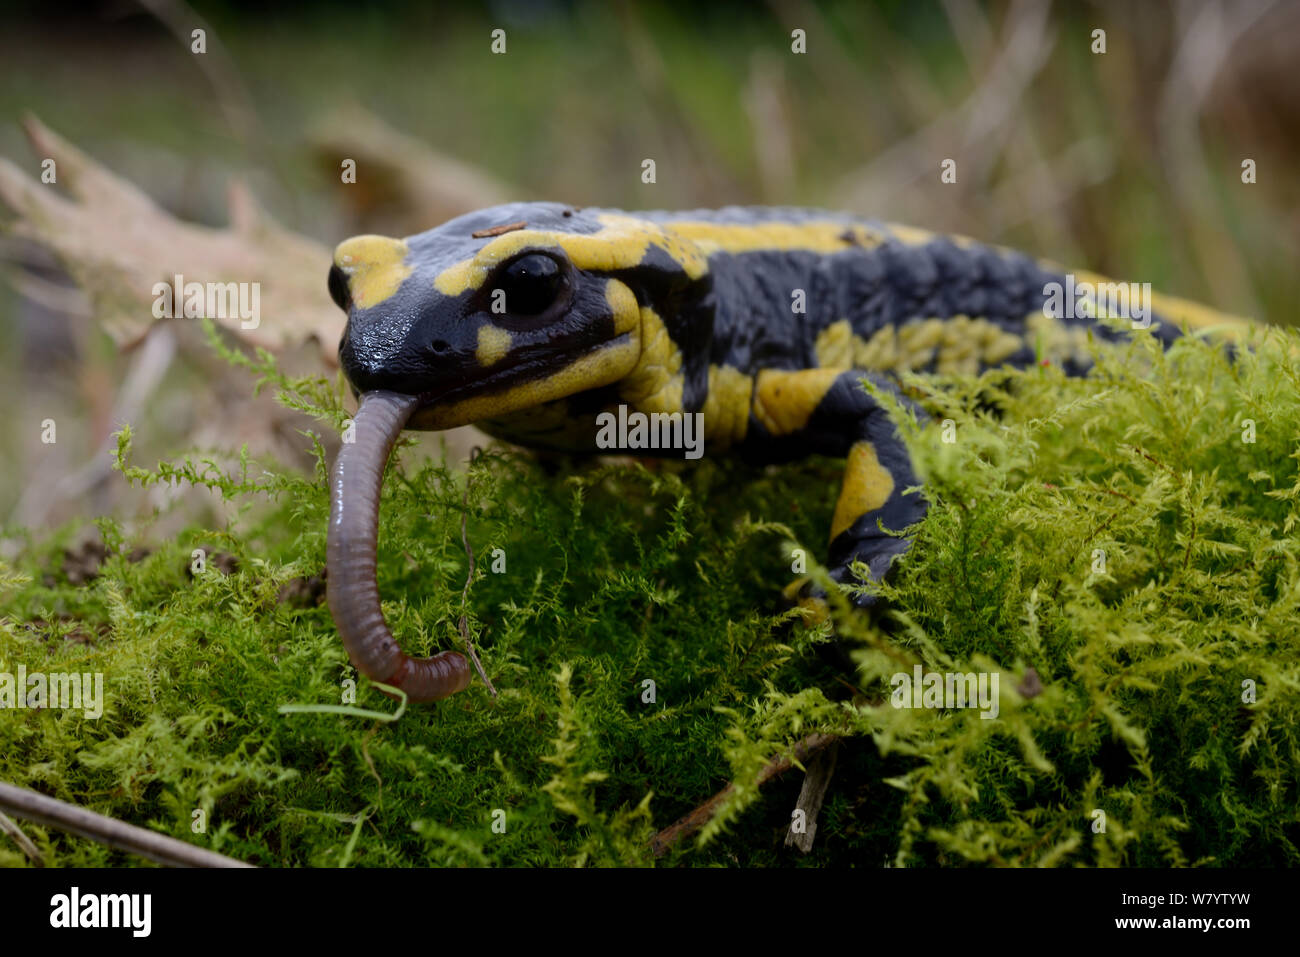 Fire salamander (Salamandra salamandra) eating a earthworm, Poitou, France. March. Stock Photo